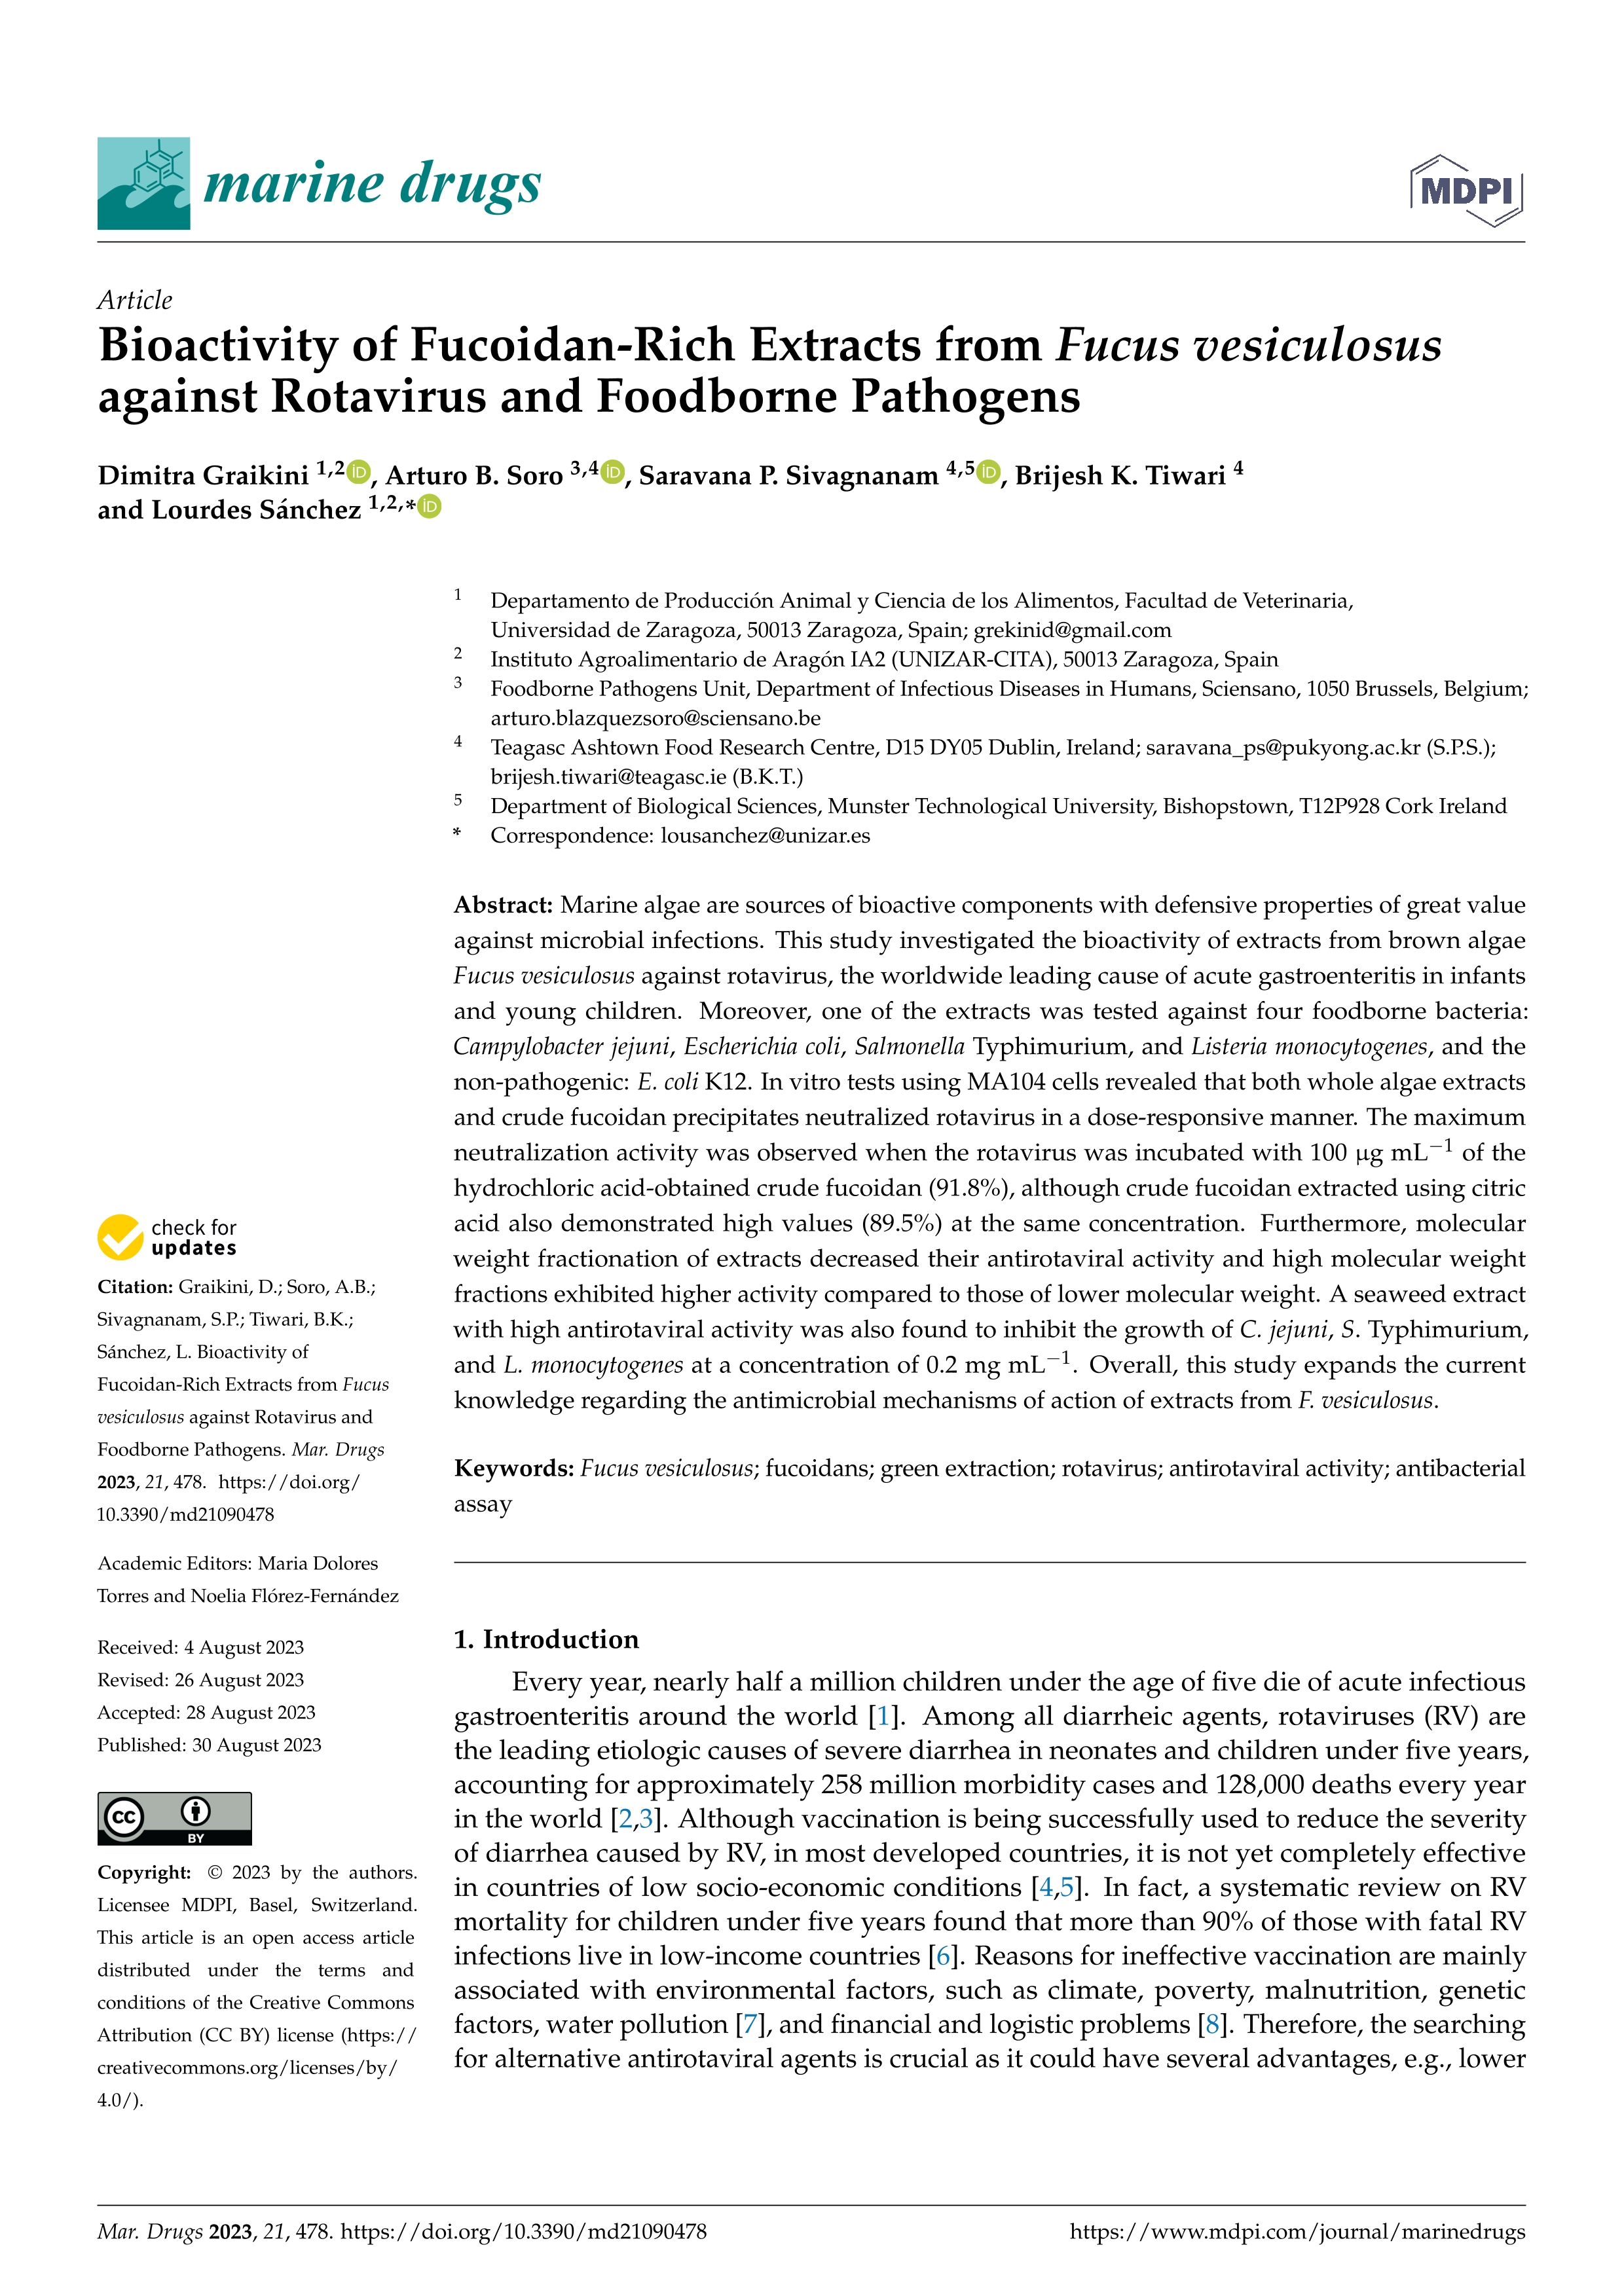 Bioactivity of fucoidan-rich extracts from fucus vesiculosus against rotavirus and foodborne pathogens